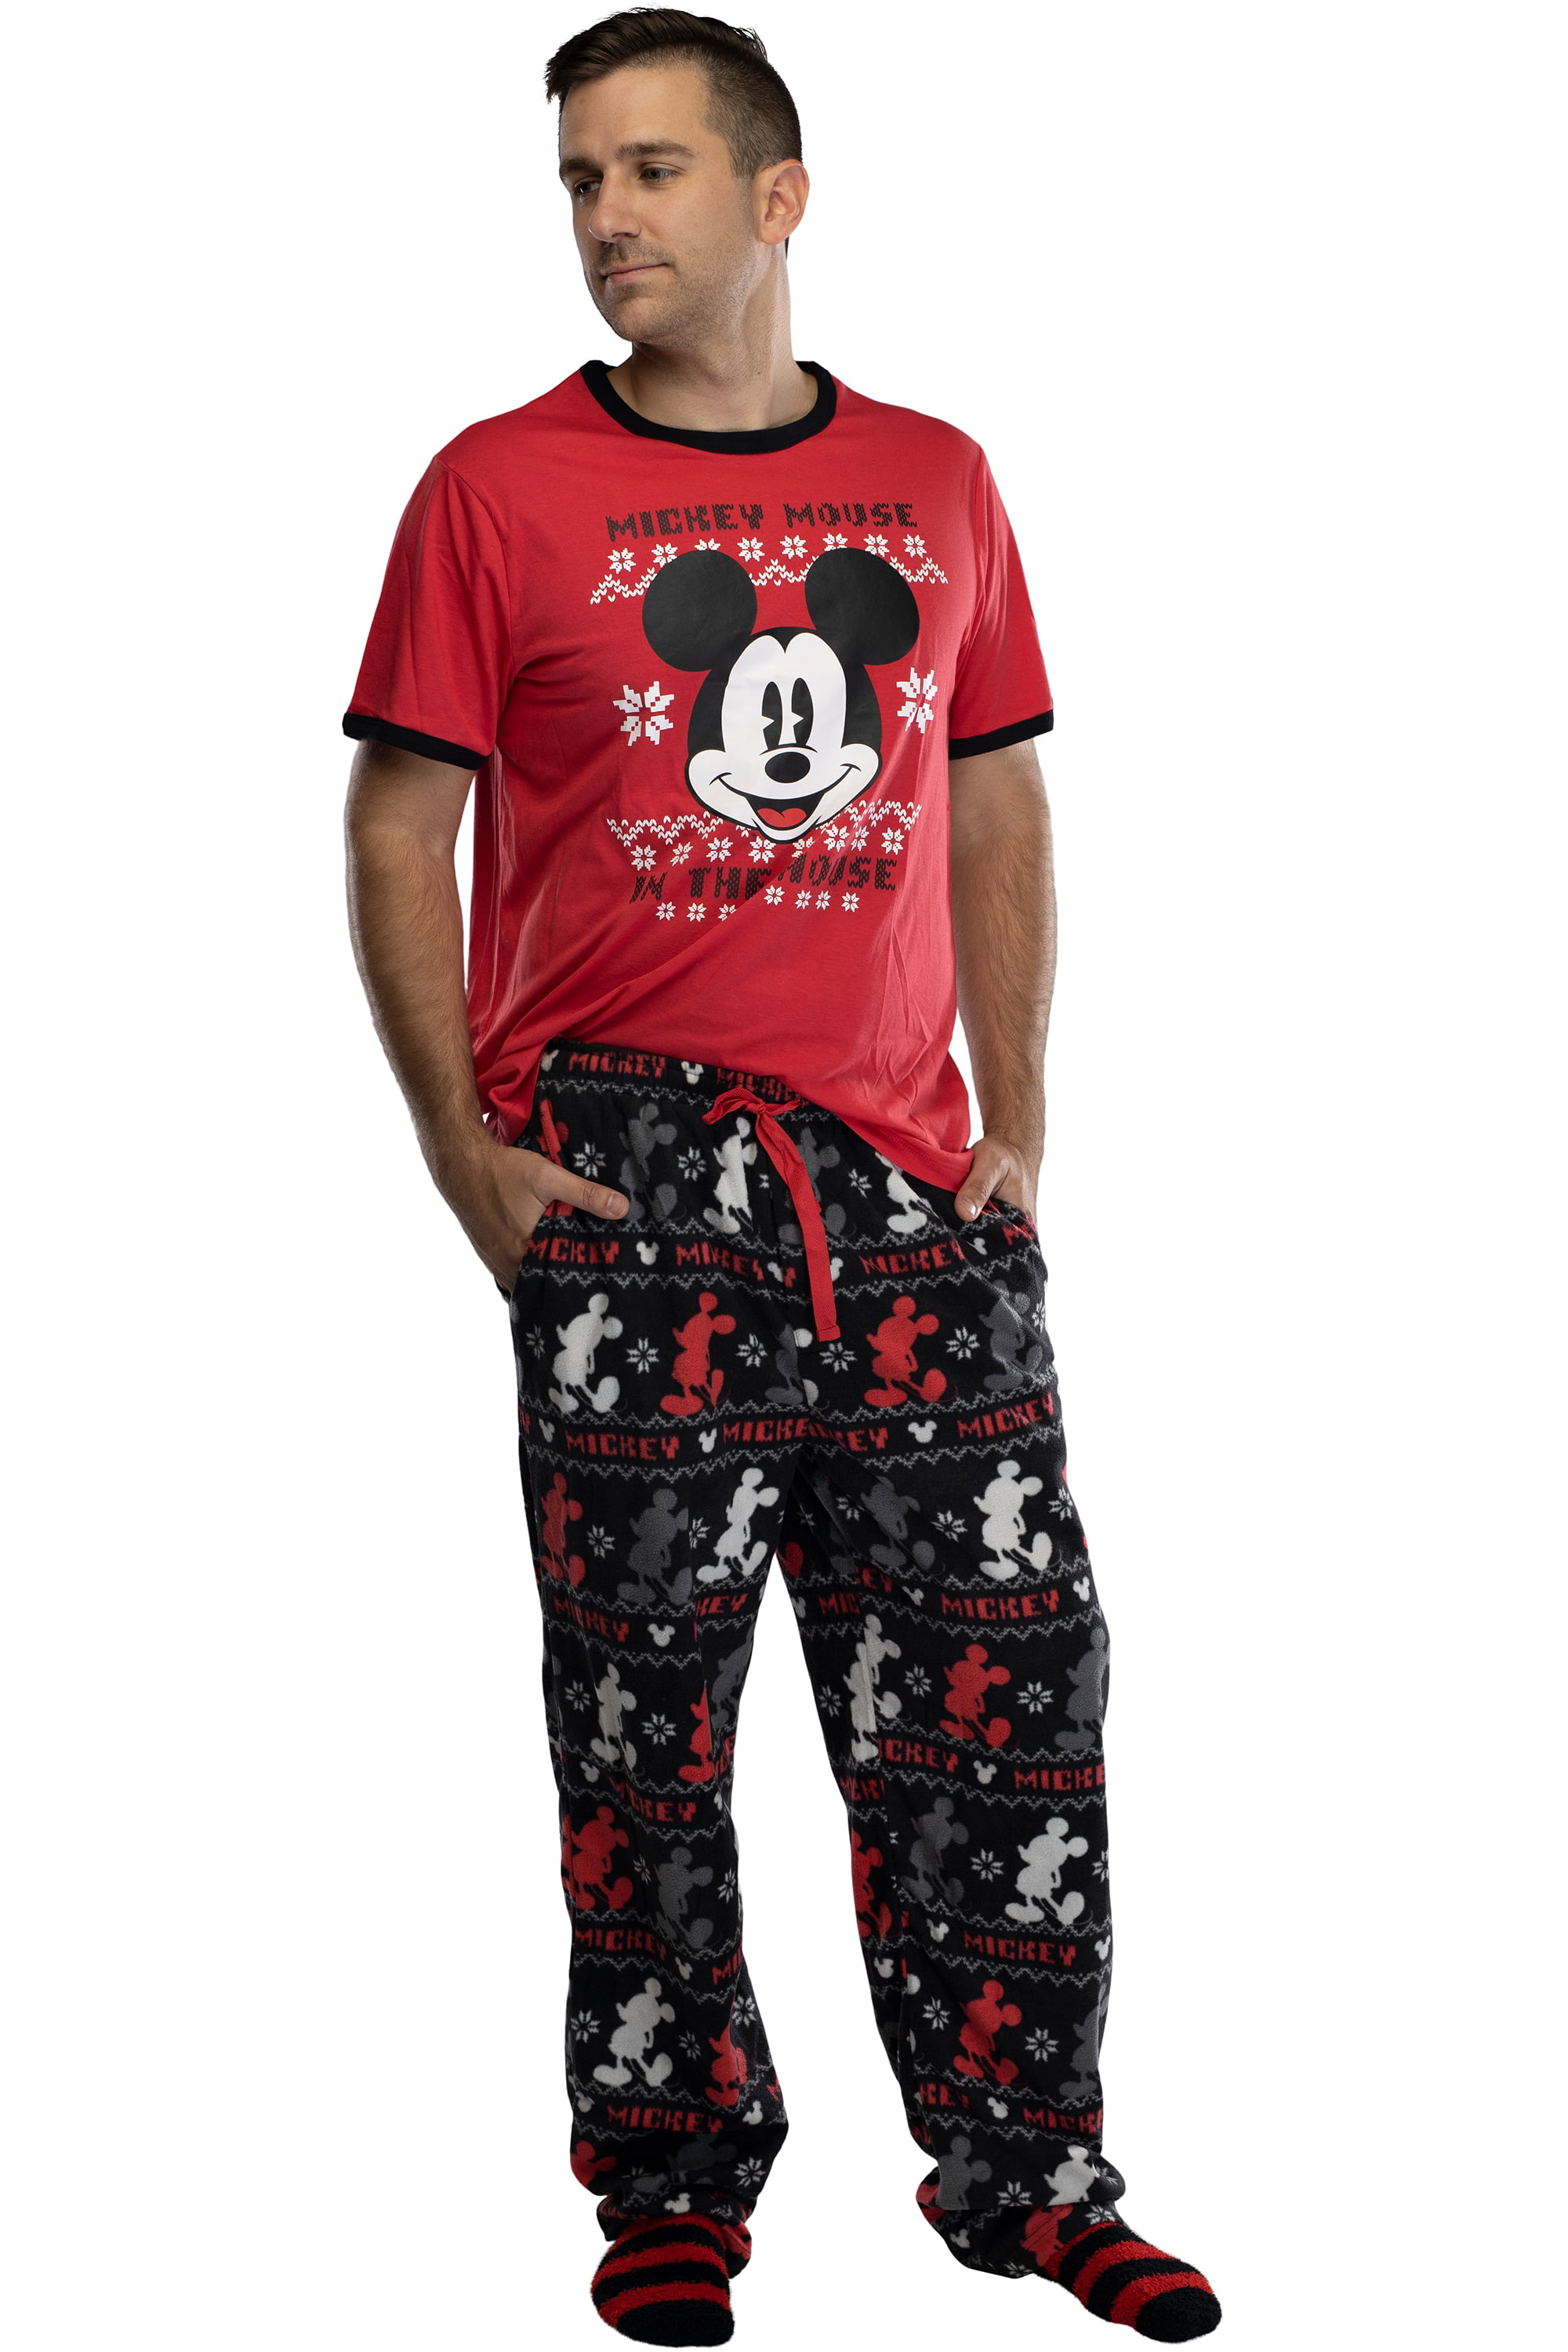 NWT Men's Disney Mickey Mouse Tee Shirt & Lounge Pants set size L 